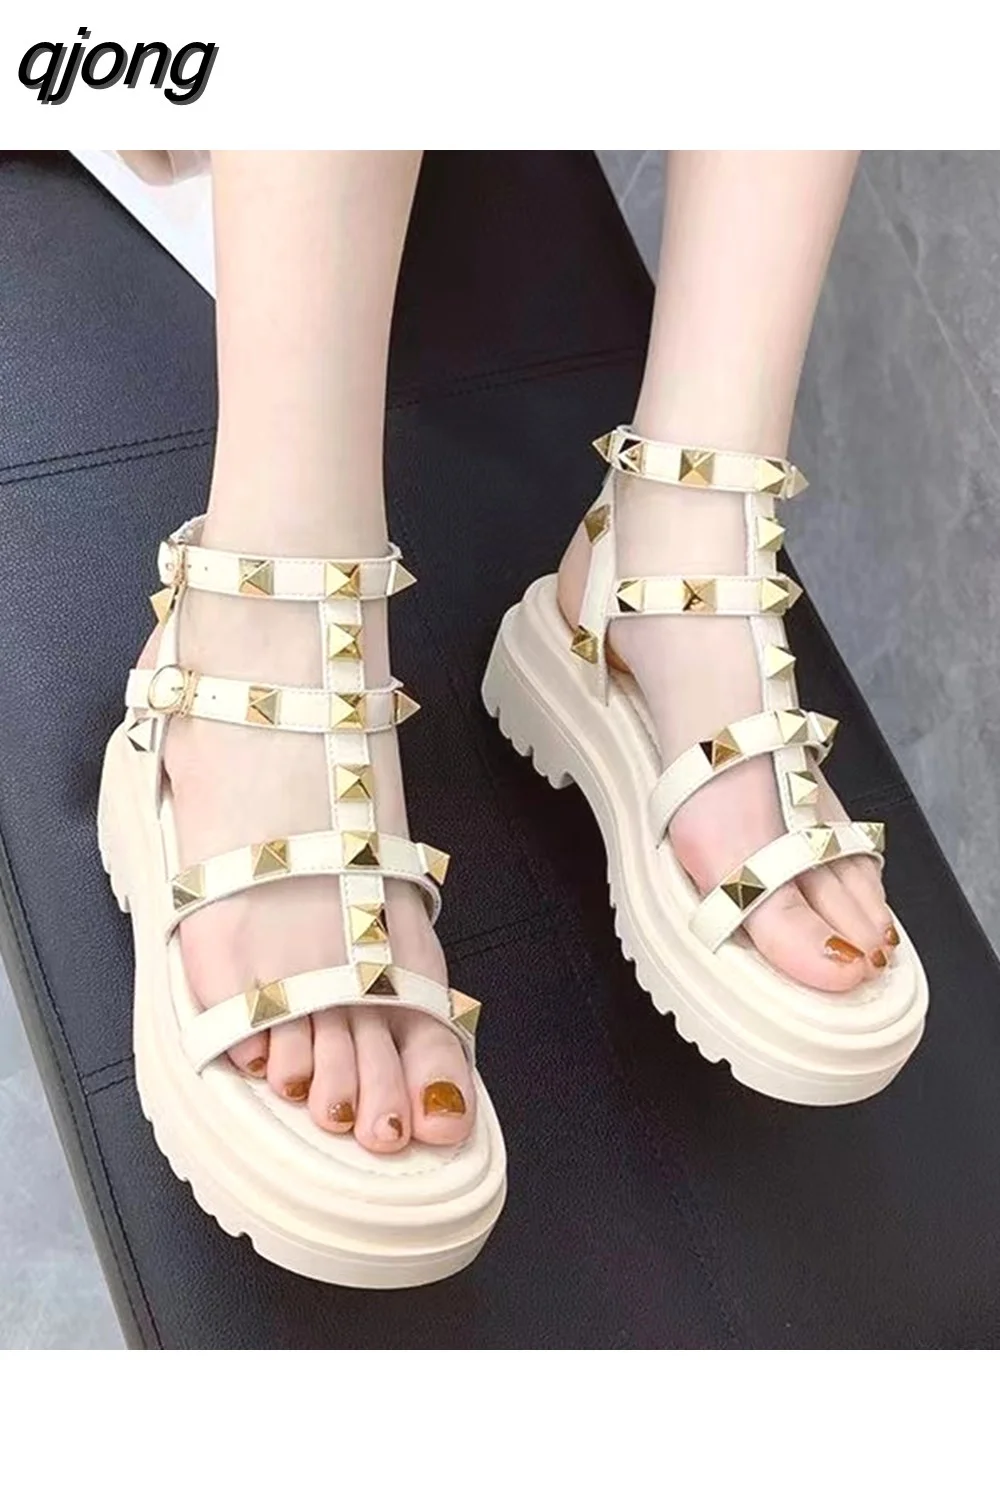 qjong Fashion Rivet Sandals Women Summer New Low-heel Roman-style Flat Womens Shoes Heels Women Open Toe Platform Sandals